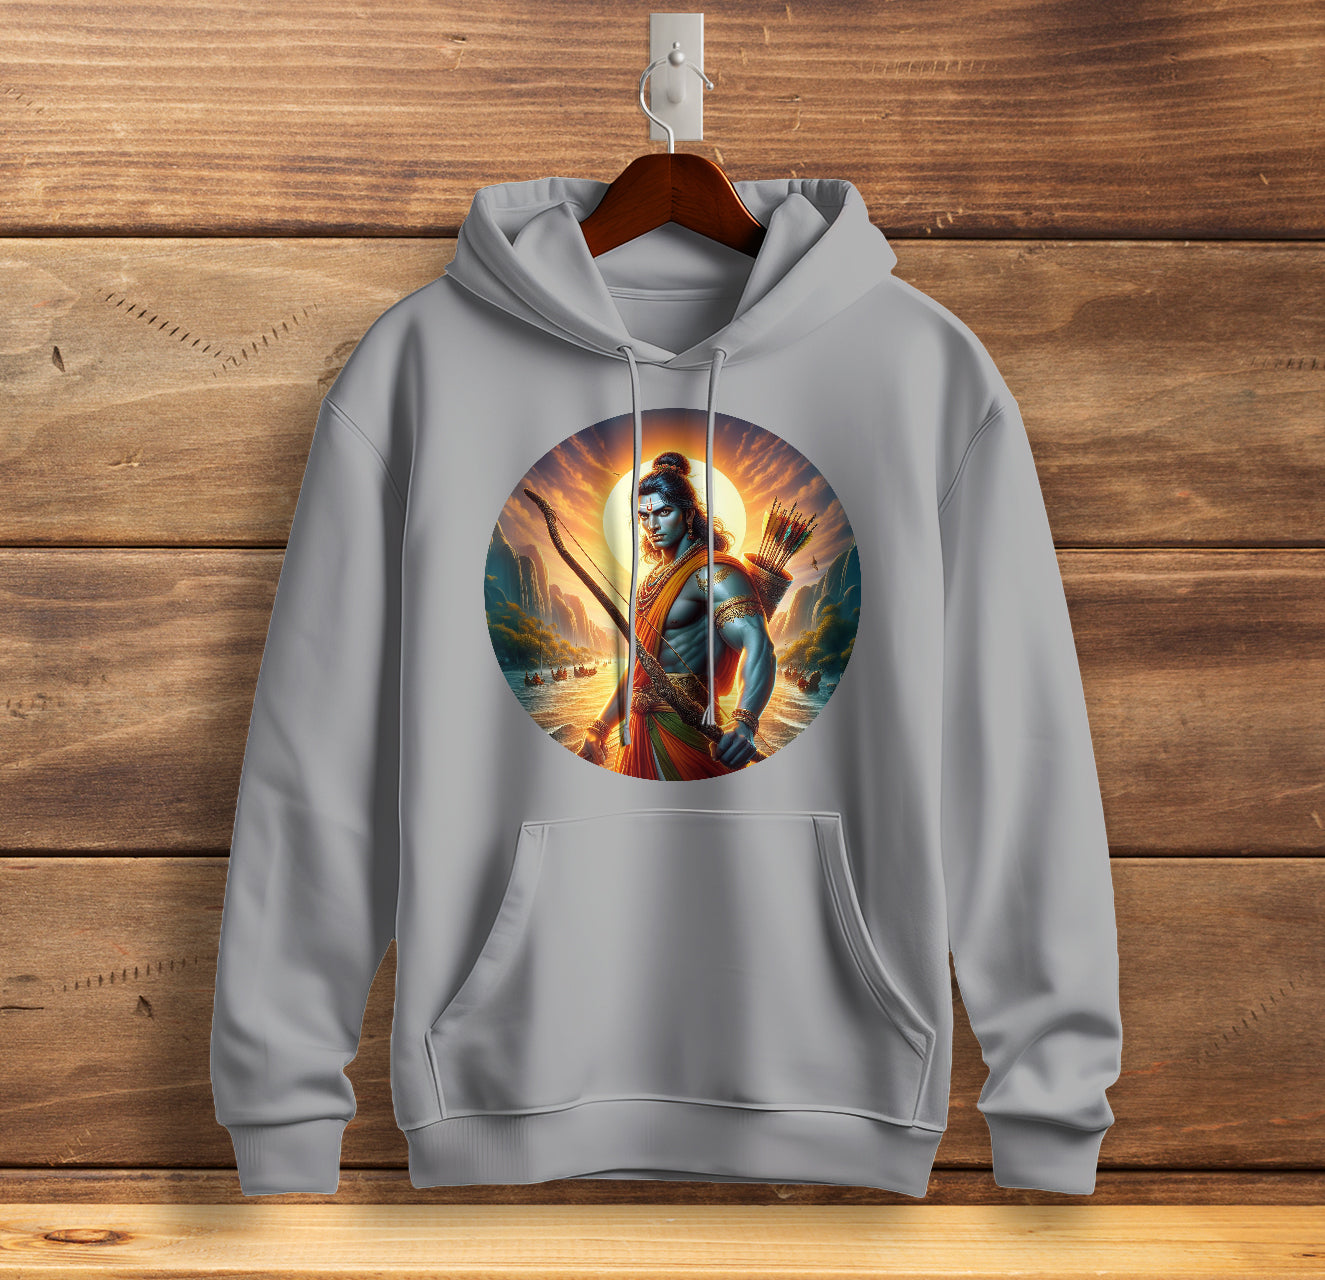 Divine Rama Warrior of Virtue  Graphic Printed Sweatshirt for Men Cotton Sweatshirt Original Super Heroes of India Hoodie